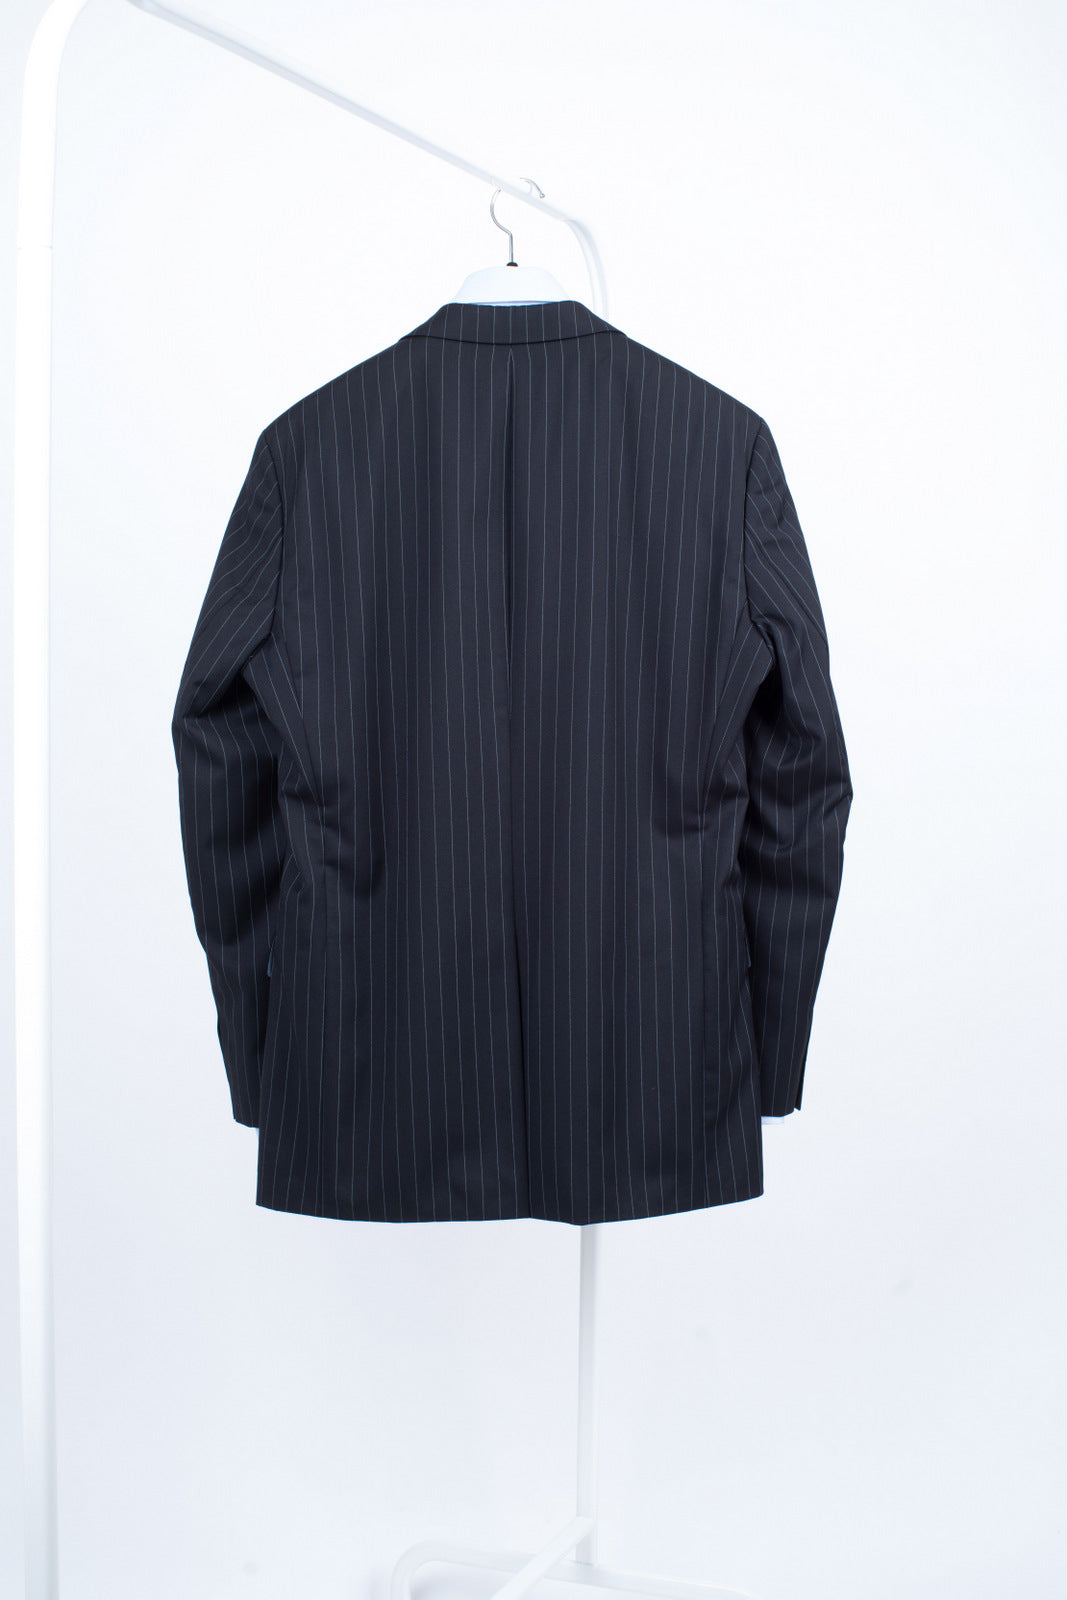 Hugo Boss Dark Navy Wool Striped Blazer Jacket, EU 50, US 40R